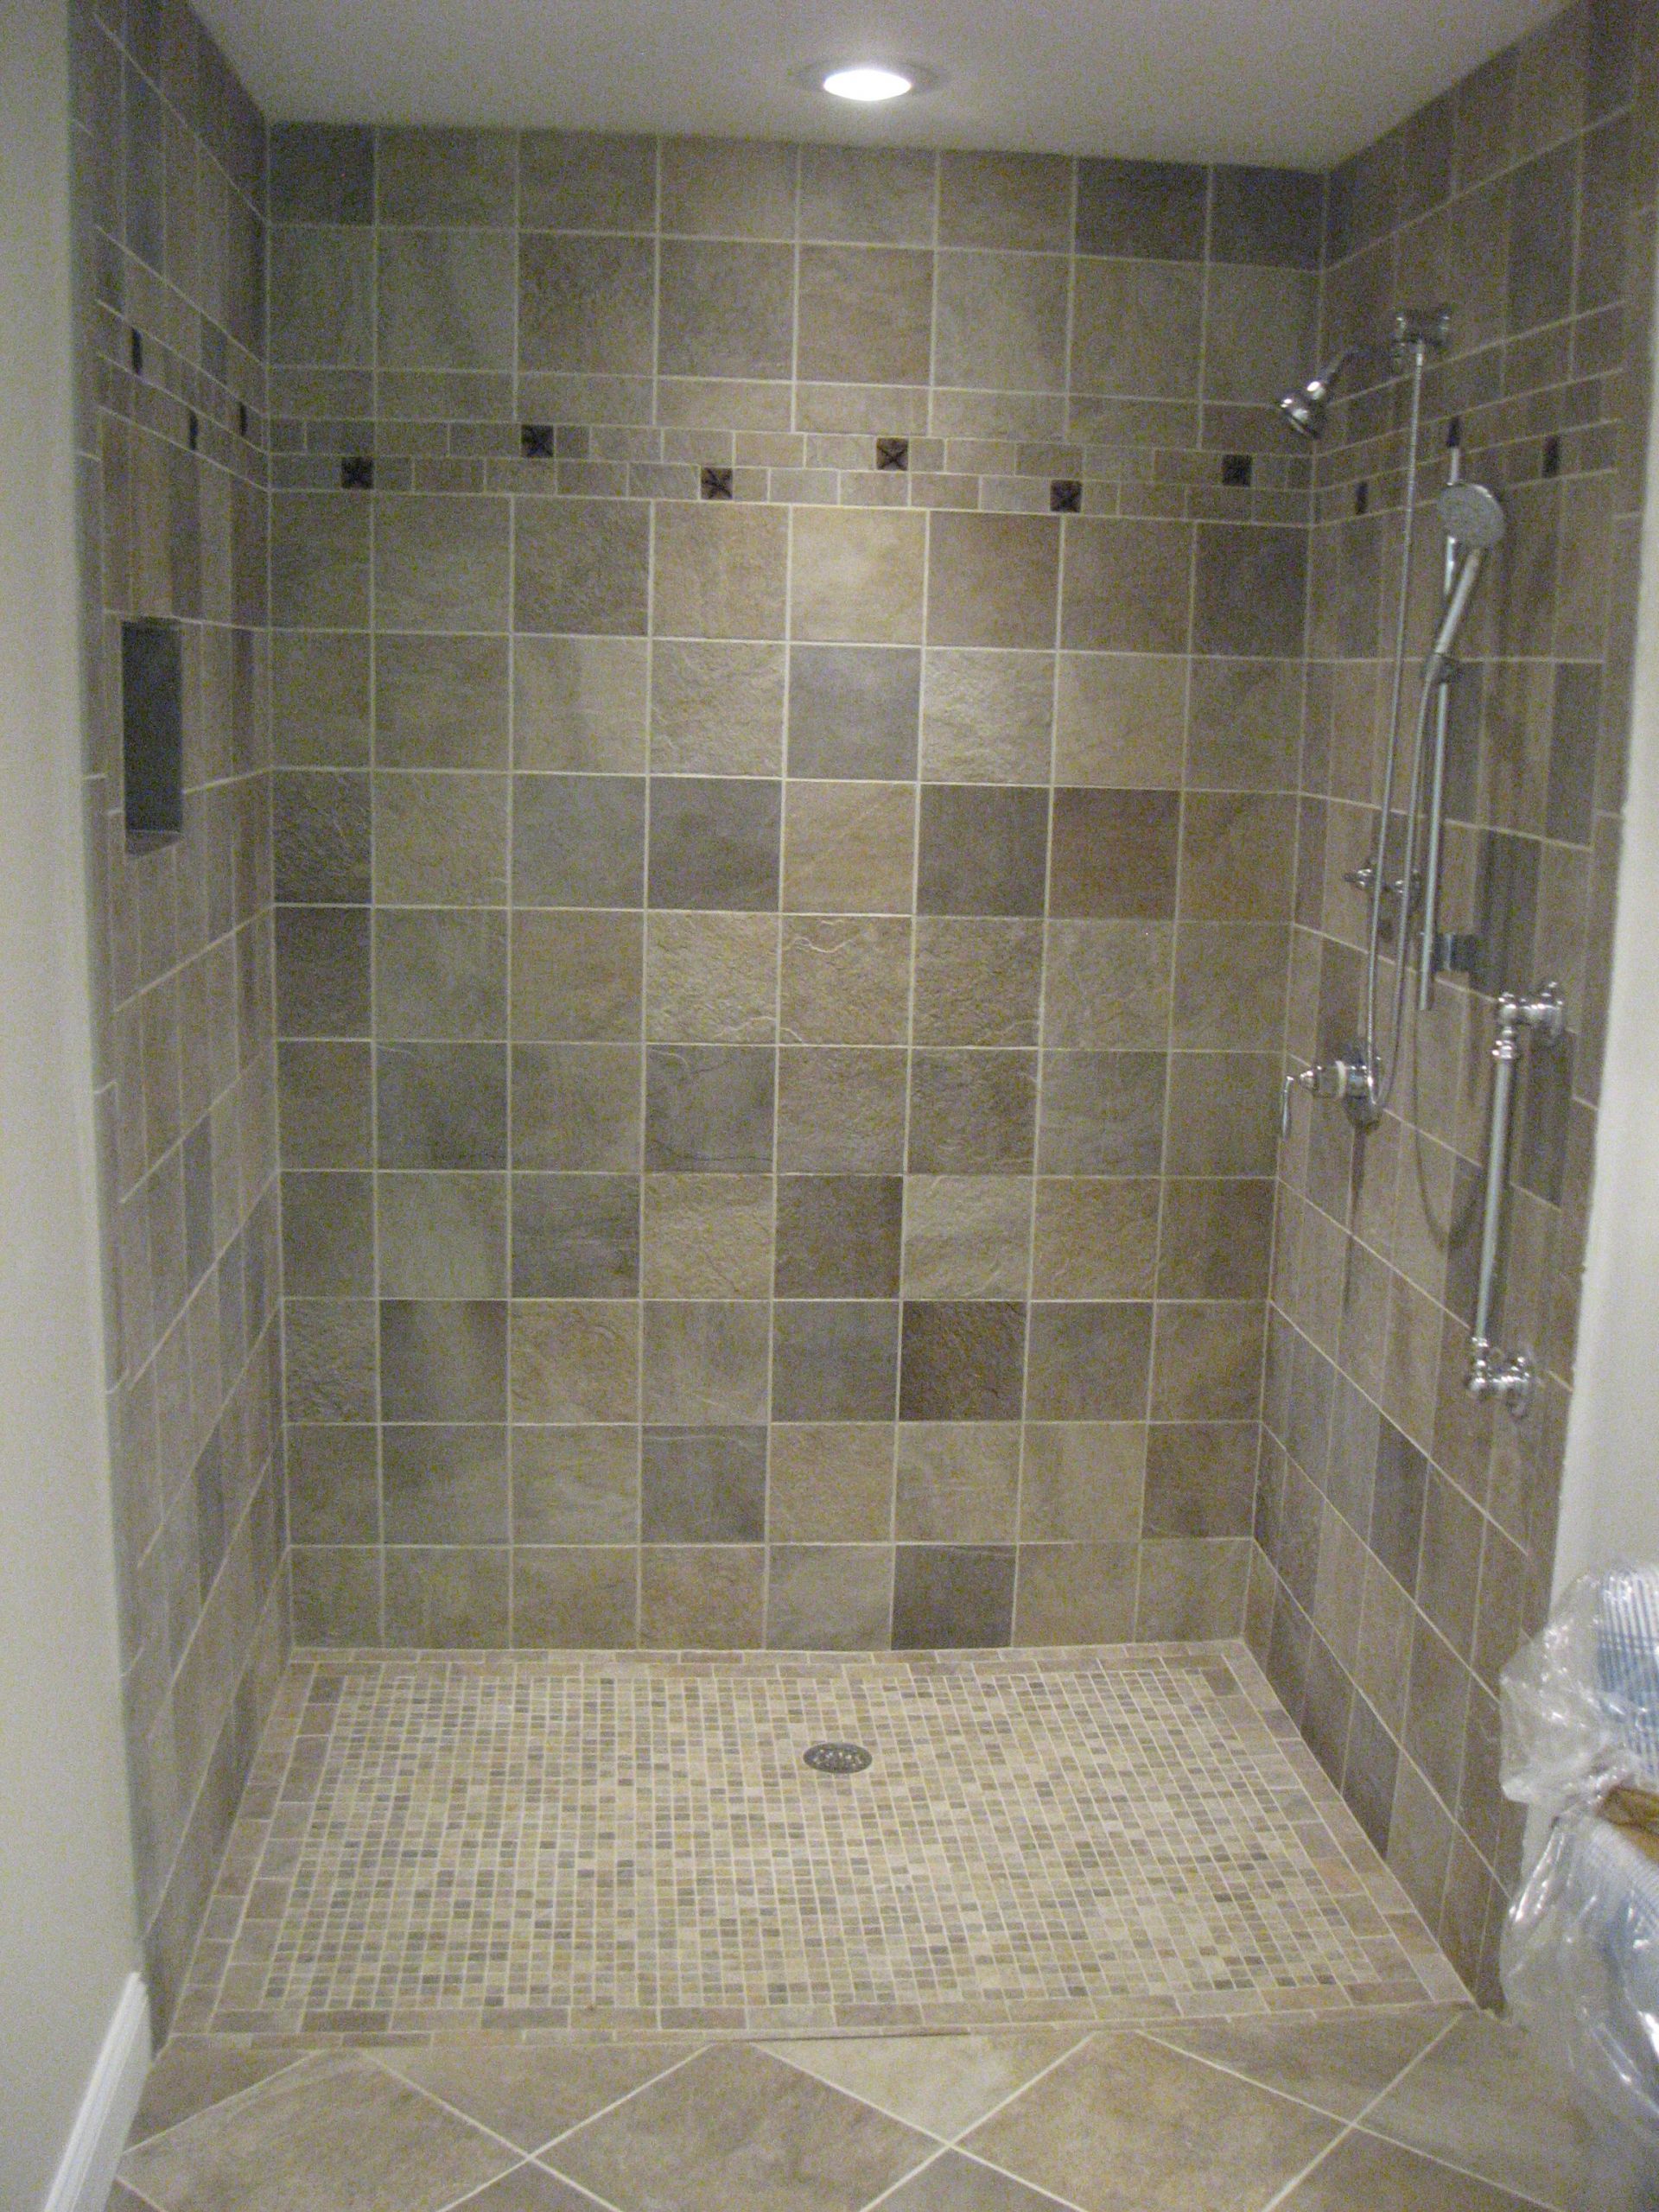 Bathroom Tiles Design Images
 Bathroom Design Most Luxurious Bath With Shower Tile